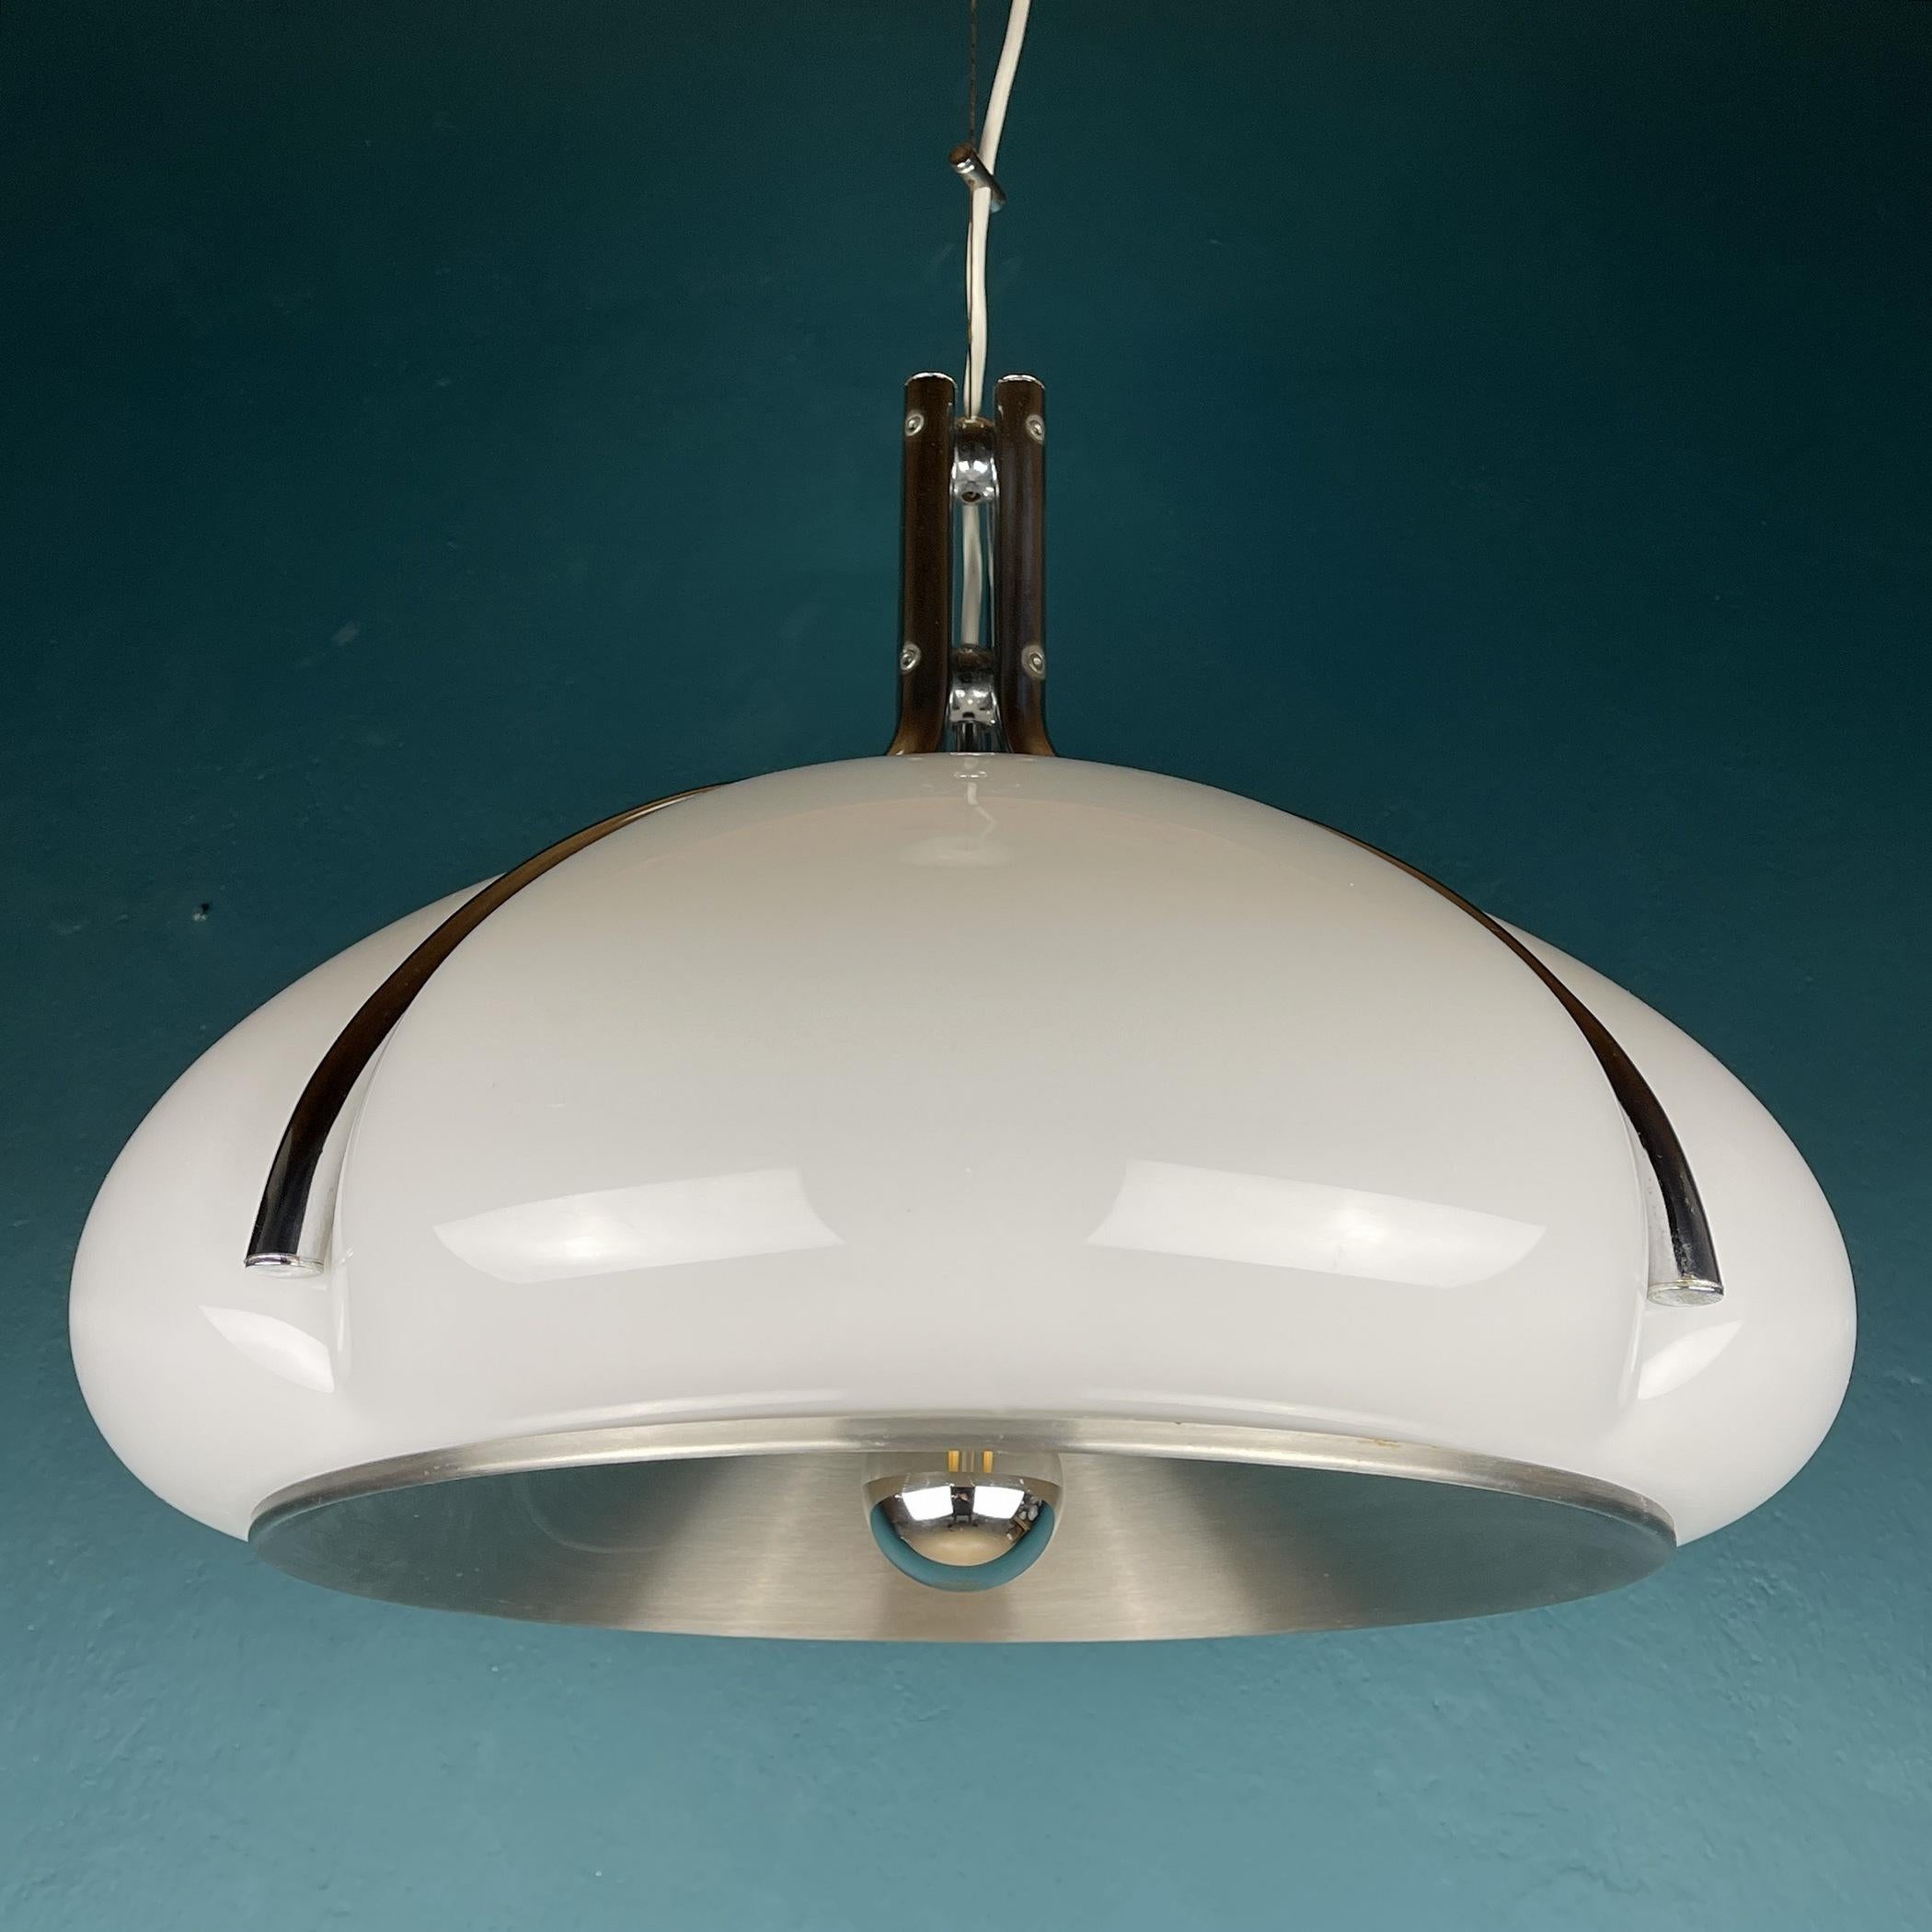 The Quadrifoglio pendant lamp was made Studio 6G, the Harvey Guzzini design-team led by Luigi Massoni in 1960-1970s. This fabulous very rare lamp, the 'Quadrifoglio' model, was designed by Luigi Massoni and made by Guzzini. In 1962 Luigi Massoni was